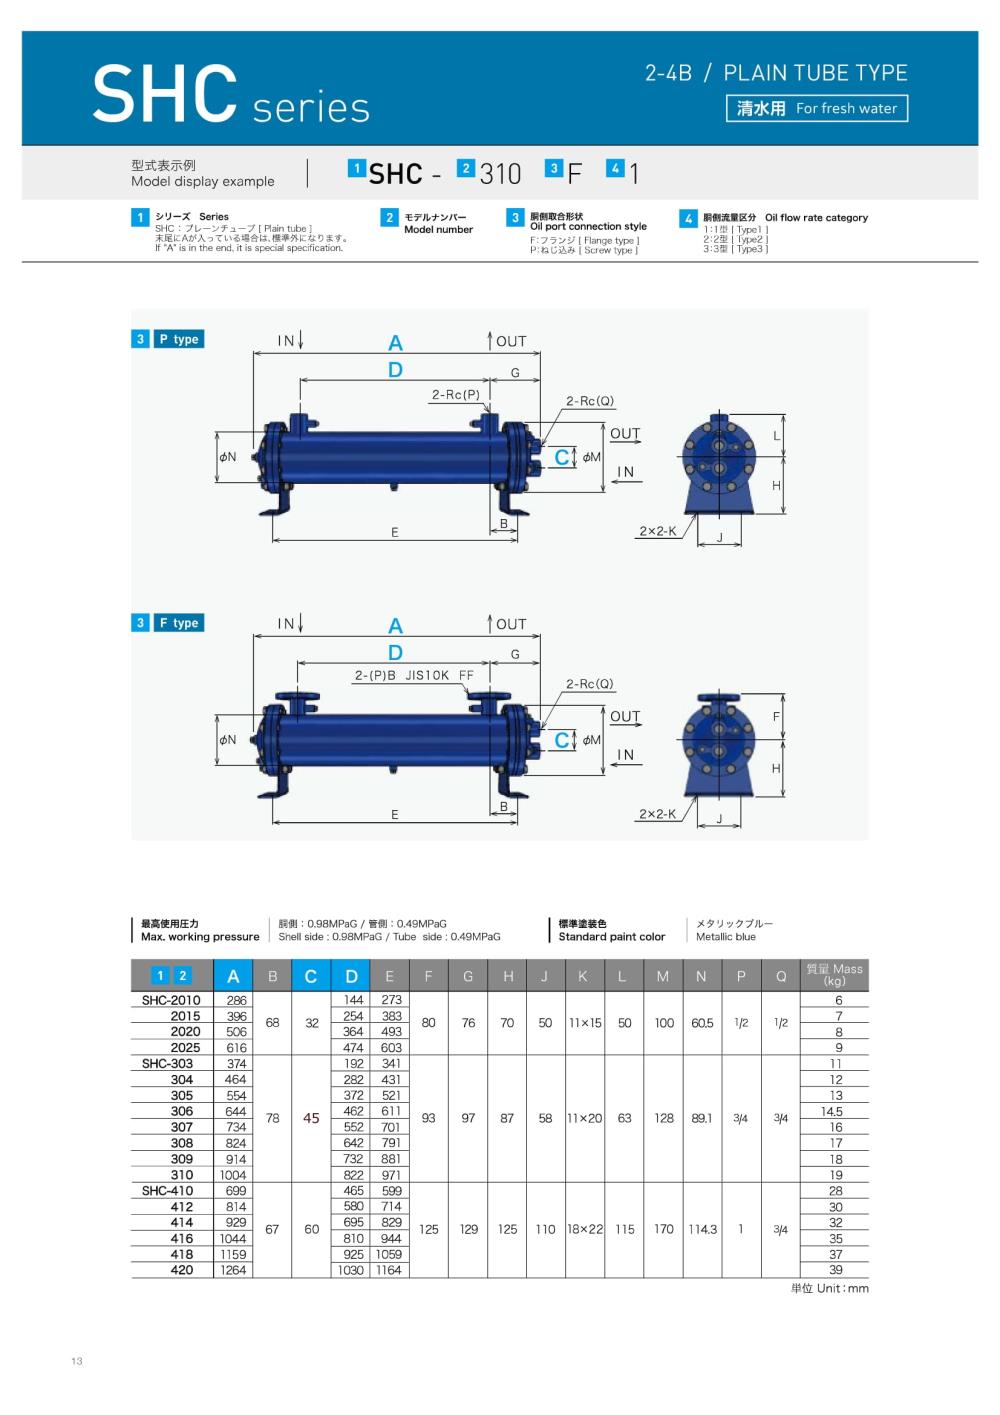 KAMUI Oil Cooler SHC-418 Series,SHC-418F1, SHC-418F2, SHC-418F3, SHC-418P1, SHC-418P2, SHC-418P3, KAMUI, Oil Cooler, Heat Exchanger,KAMUI,Machinery and Process Equipment/Coolers